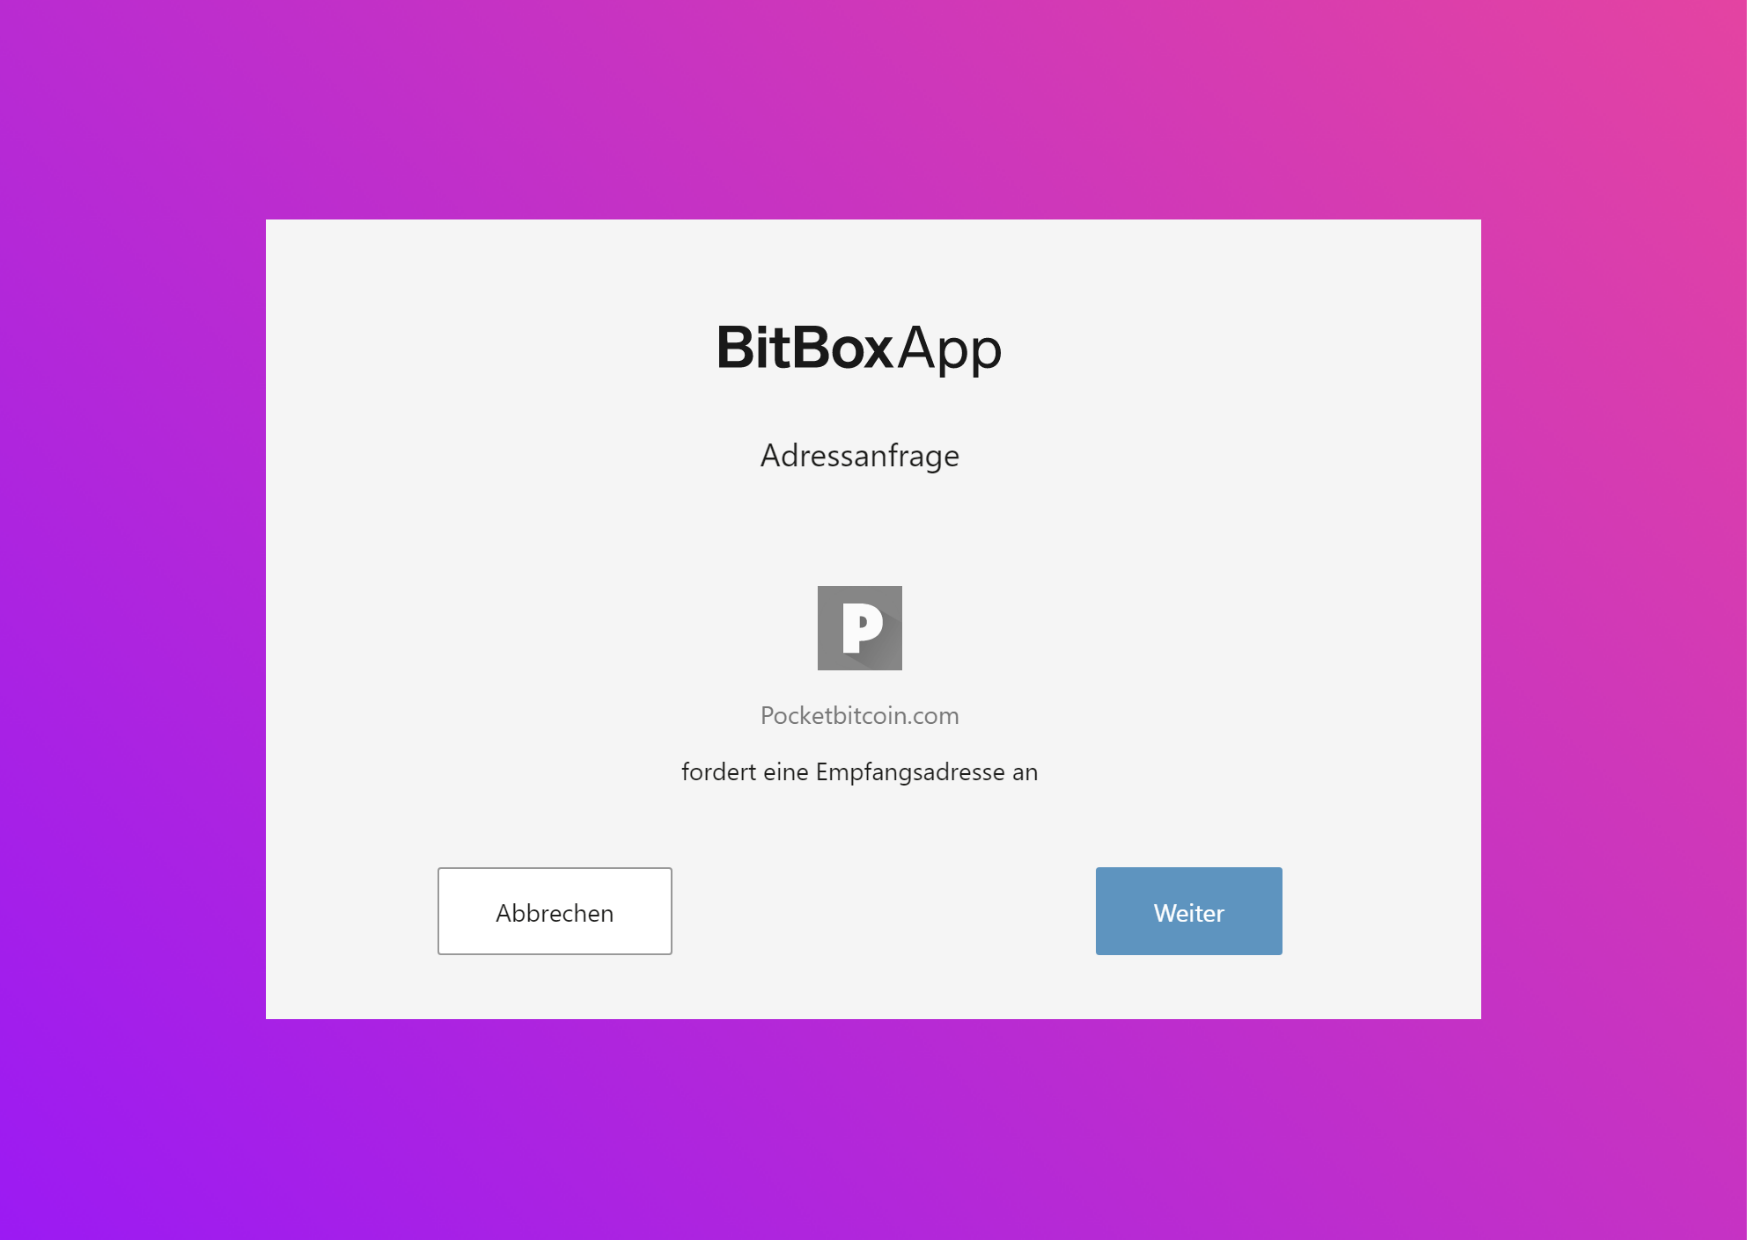 Bildschirmfoto mit der BitboxApp